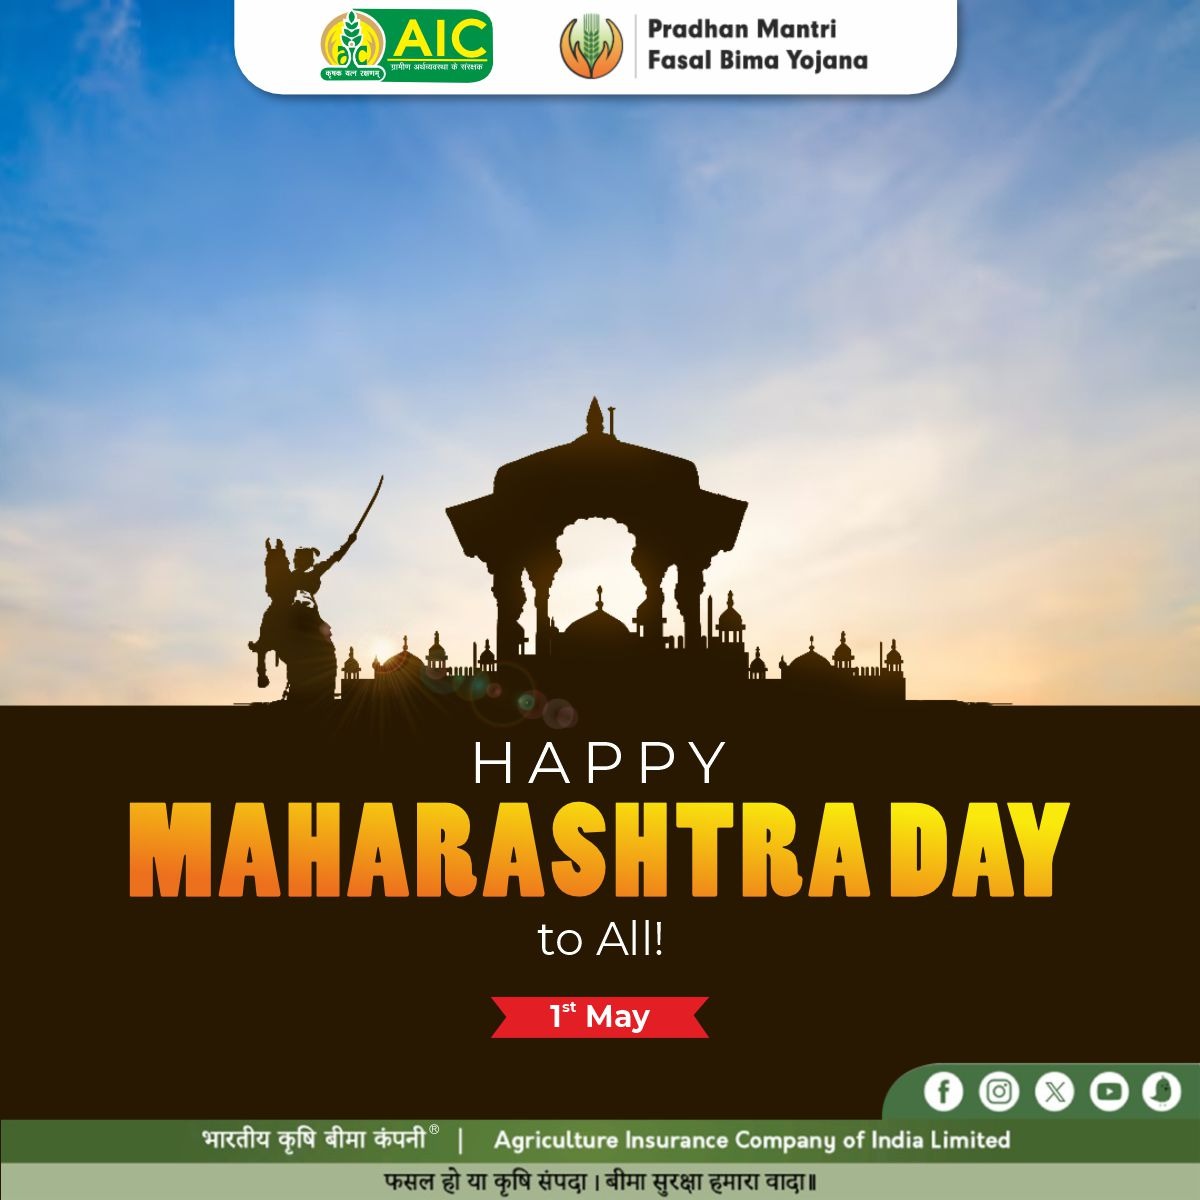 Let's celebrate the rich culture and traditions of Maharashtra. AIC wishes everyone a Happy #MaharashtraDay महाराष्ट्र दिनाच्या सर्वांना हार्दिक शुभेच्छा #AIC #ग्रामीणअर्थव्यवस्थाकेसंरक्षक #Maharashtra #MaharashtraDiwas @PIBAgriculture